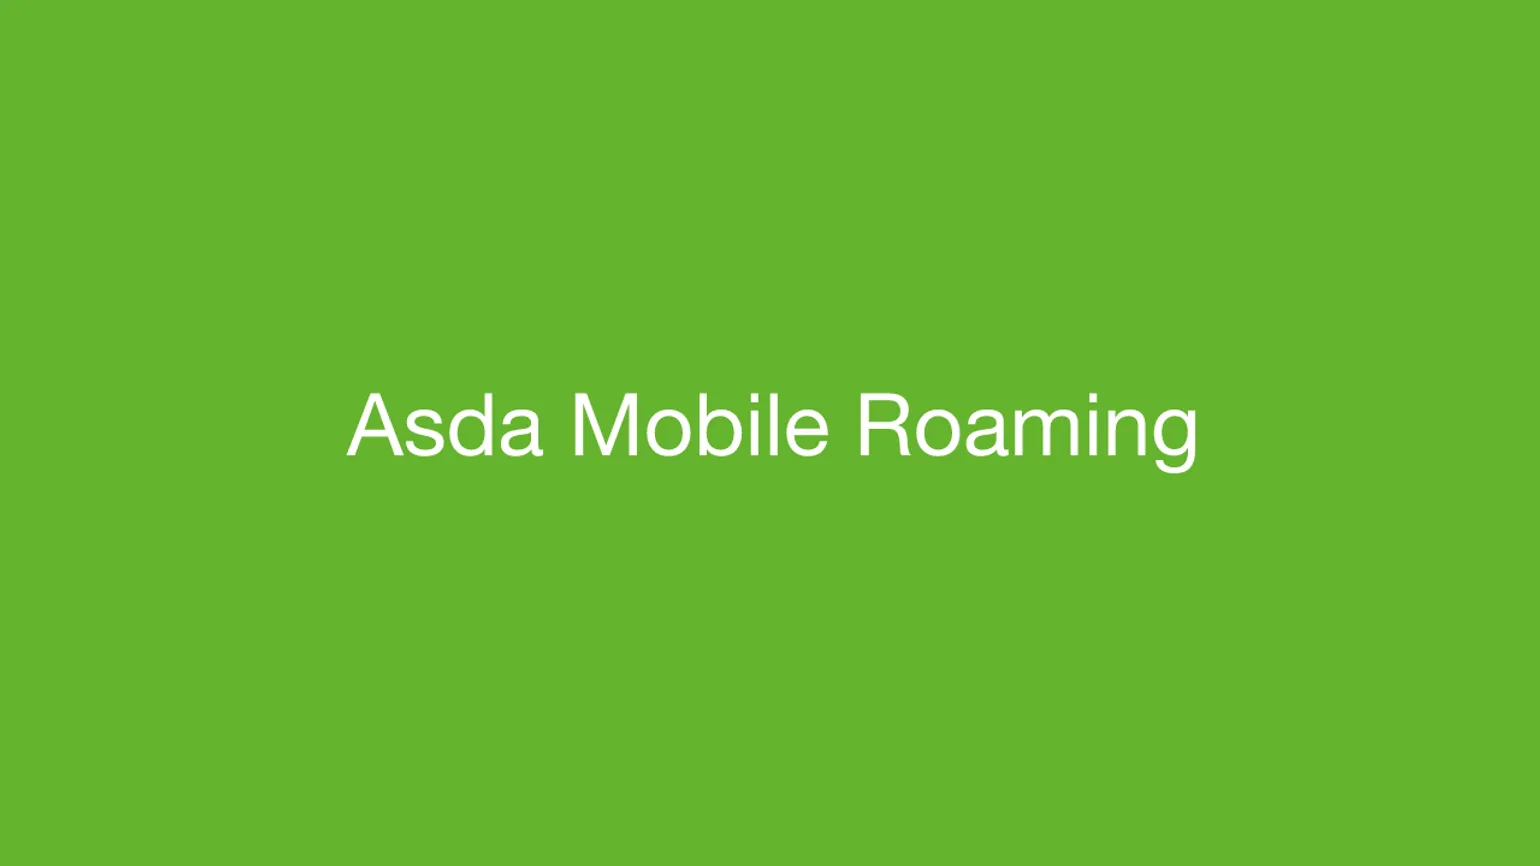 Asda Mobile roaming - International roaming with Asda Mobile explained